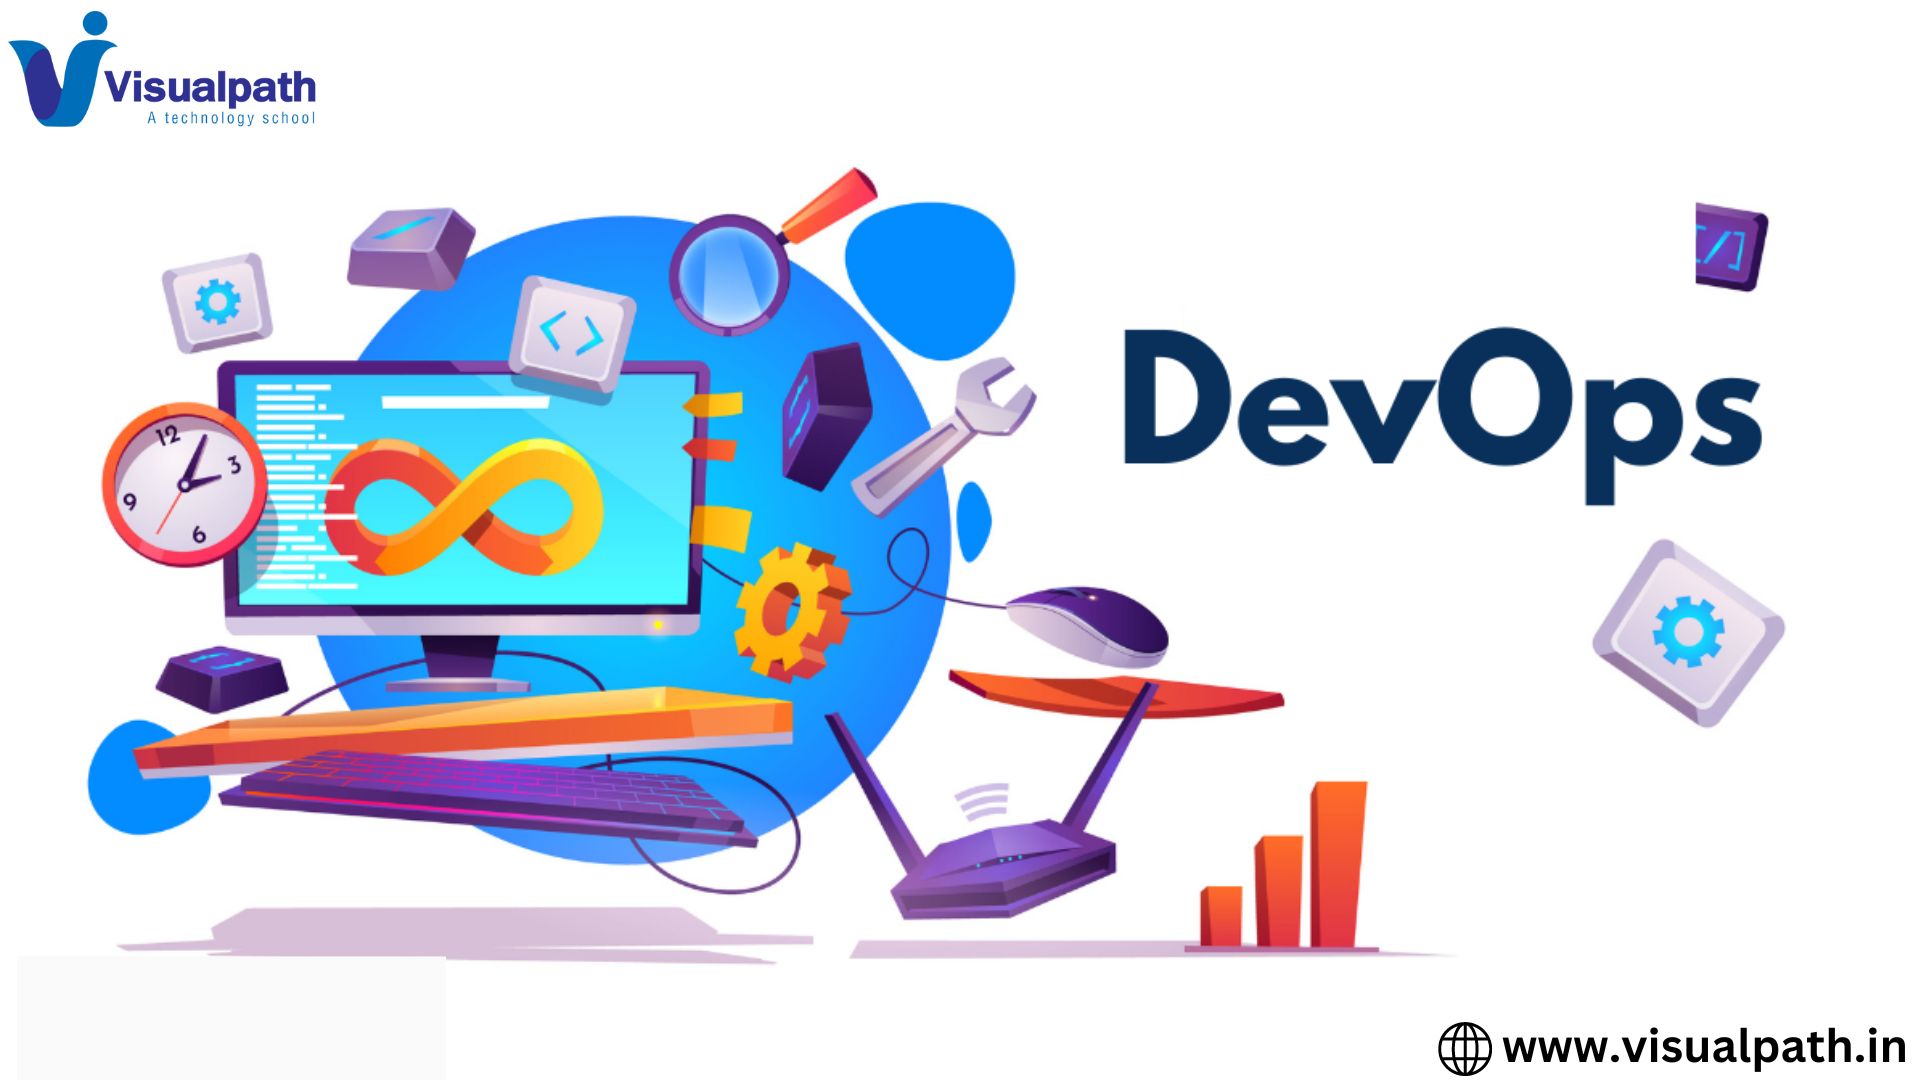 DevOps – The Future of Software Development